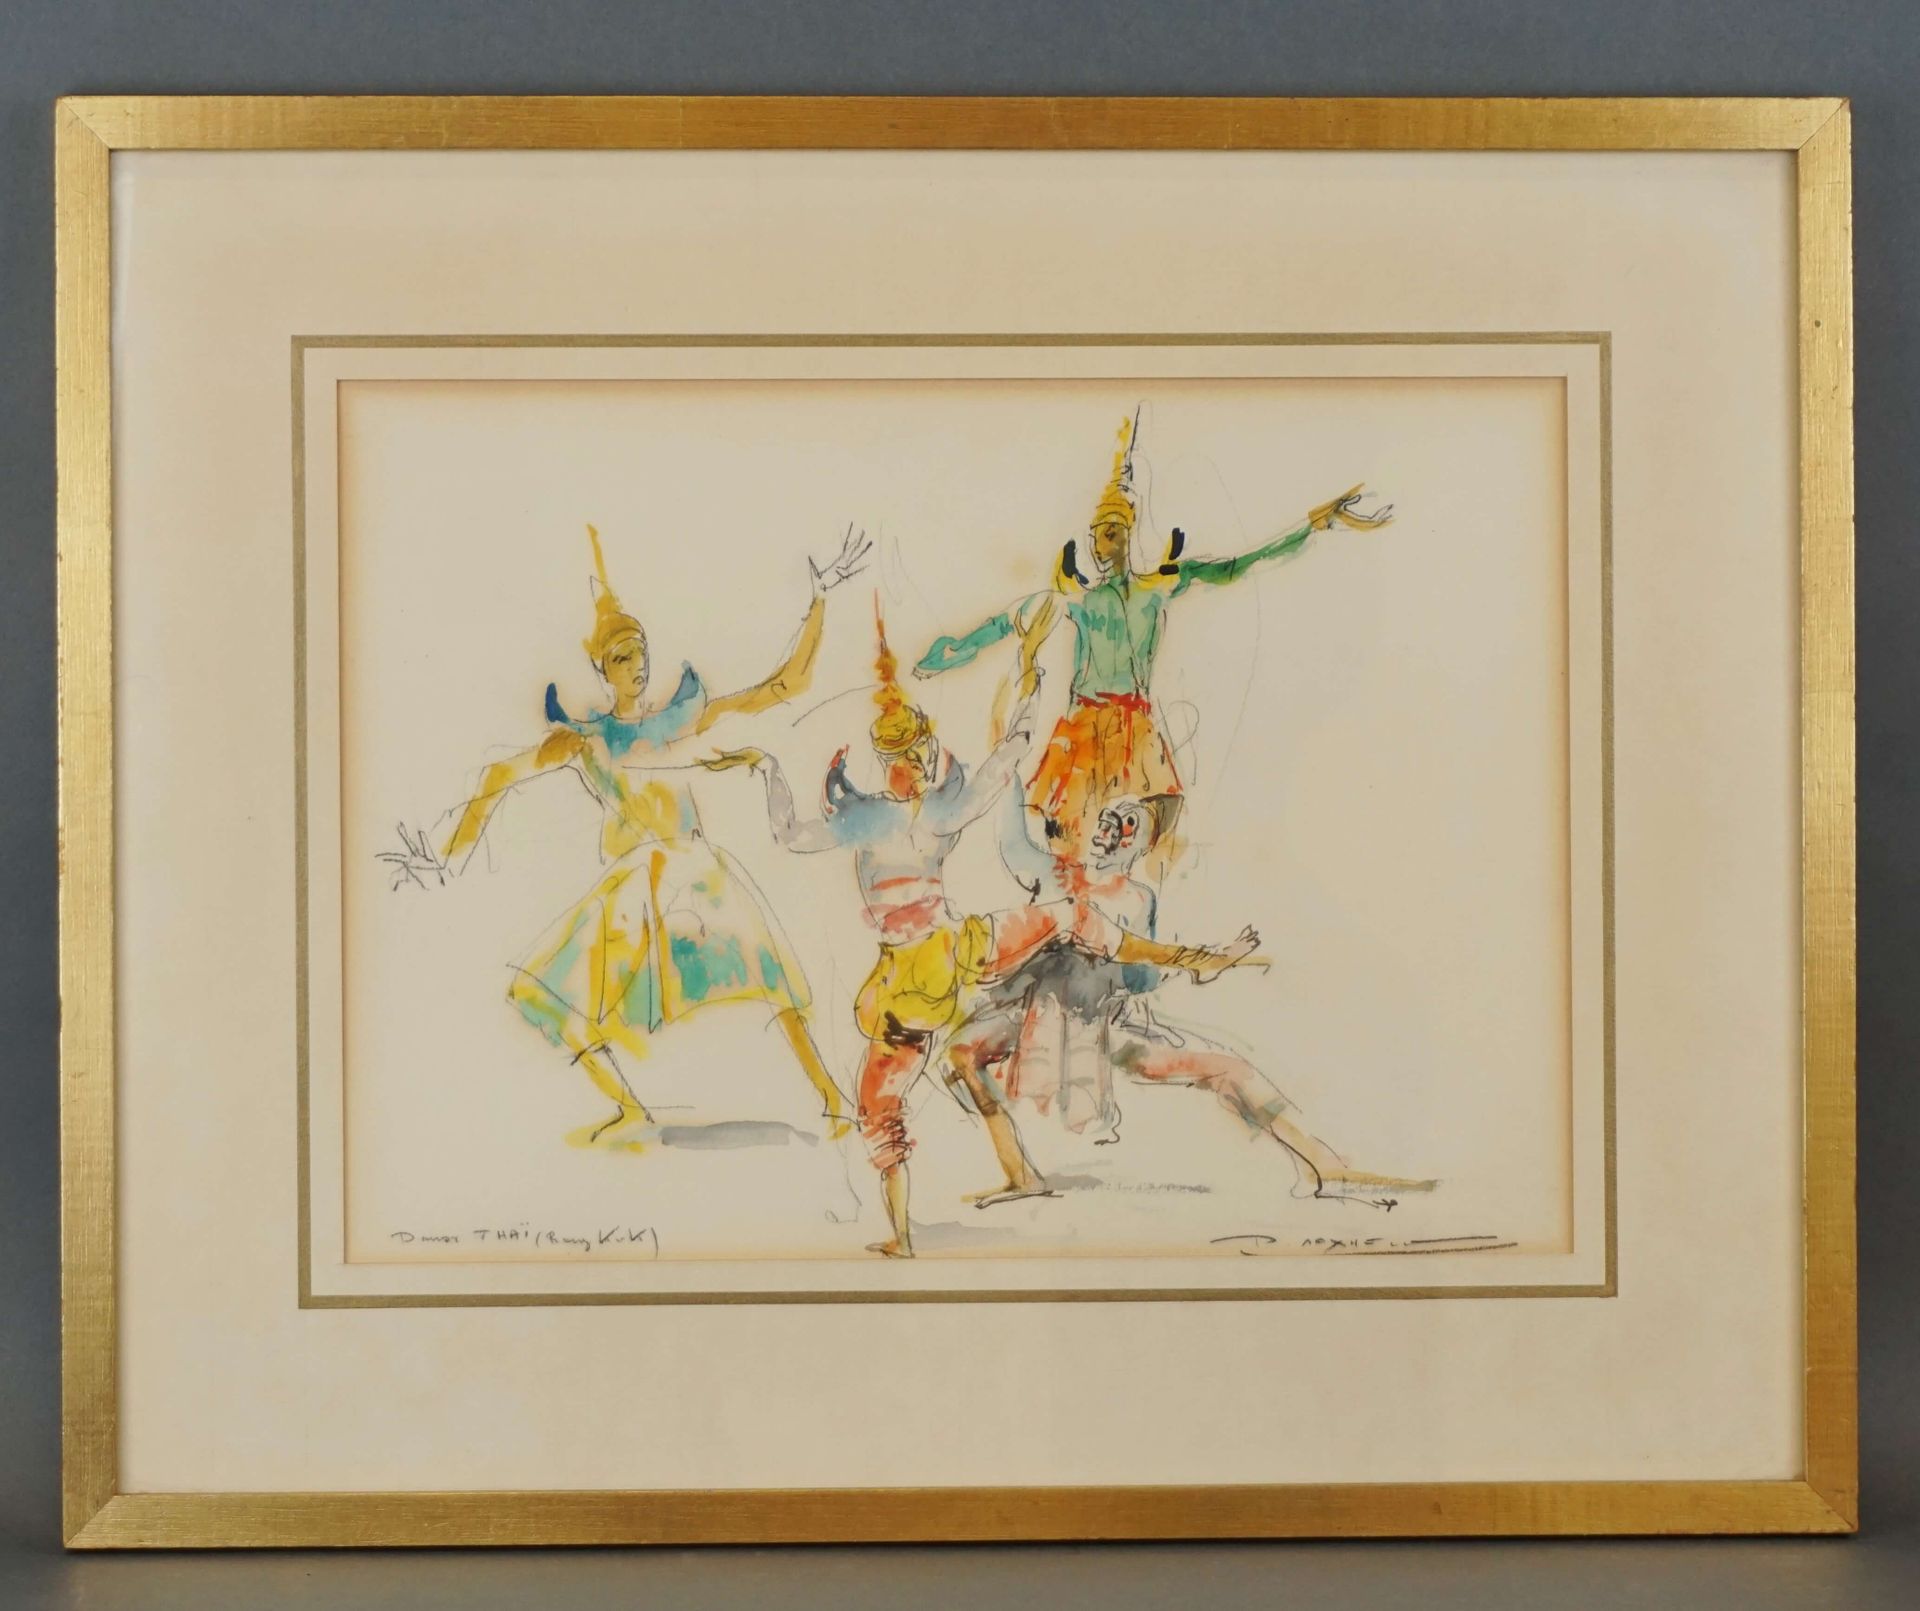 DAXHELET Paul (1905-1993) 签名为P. Daxhelet的水彩画 "泰国舞蹈"。25x34厘米